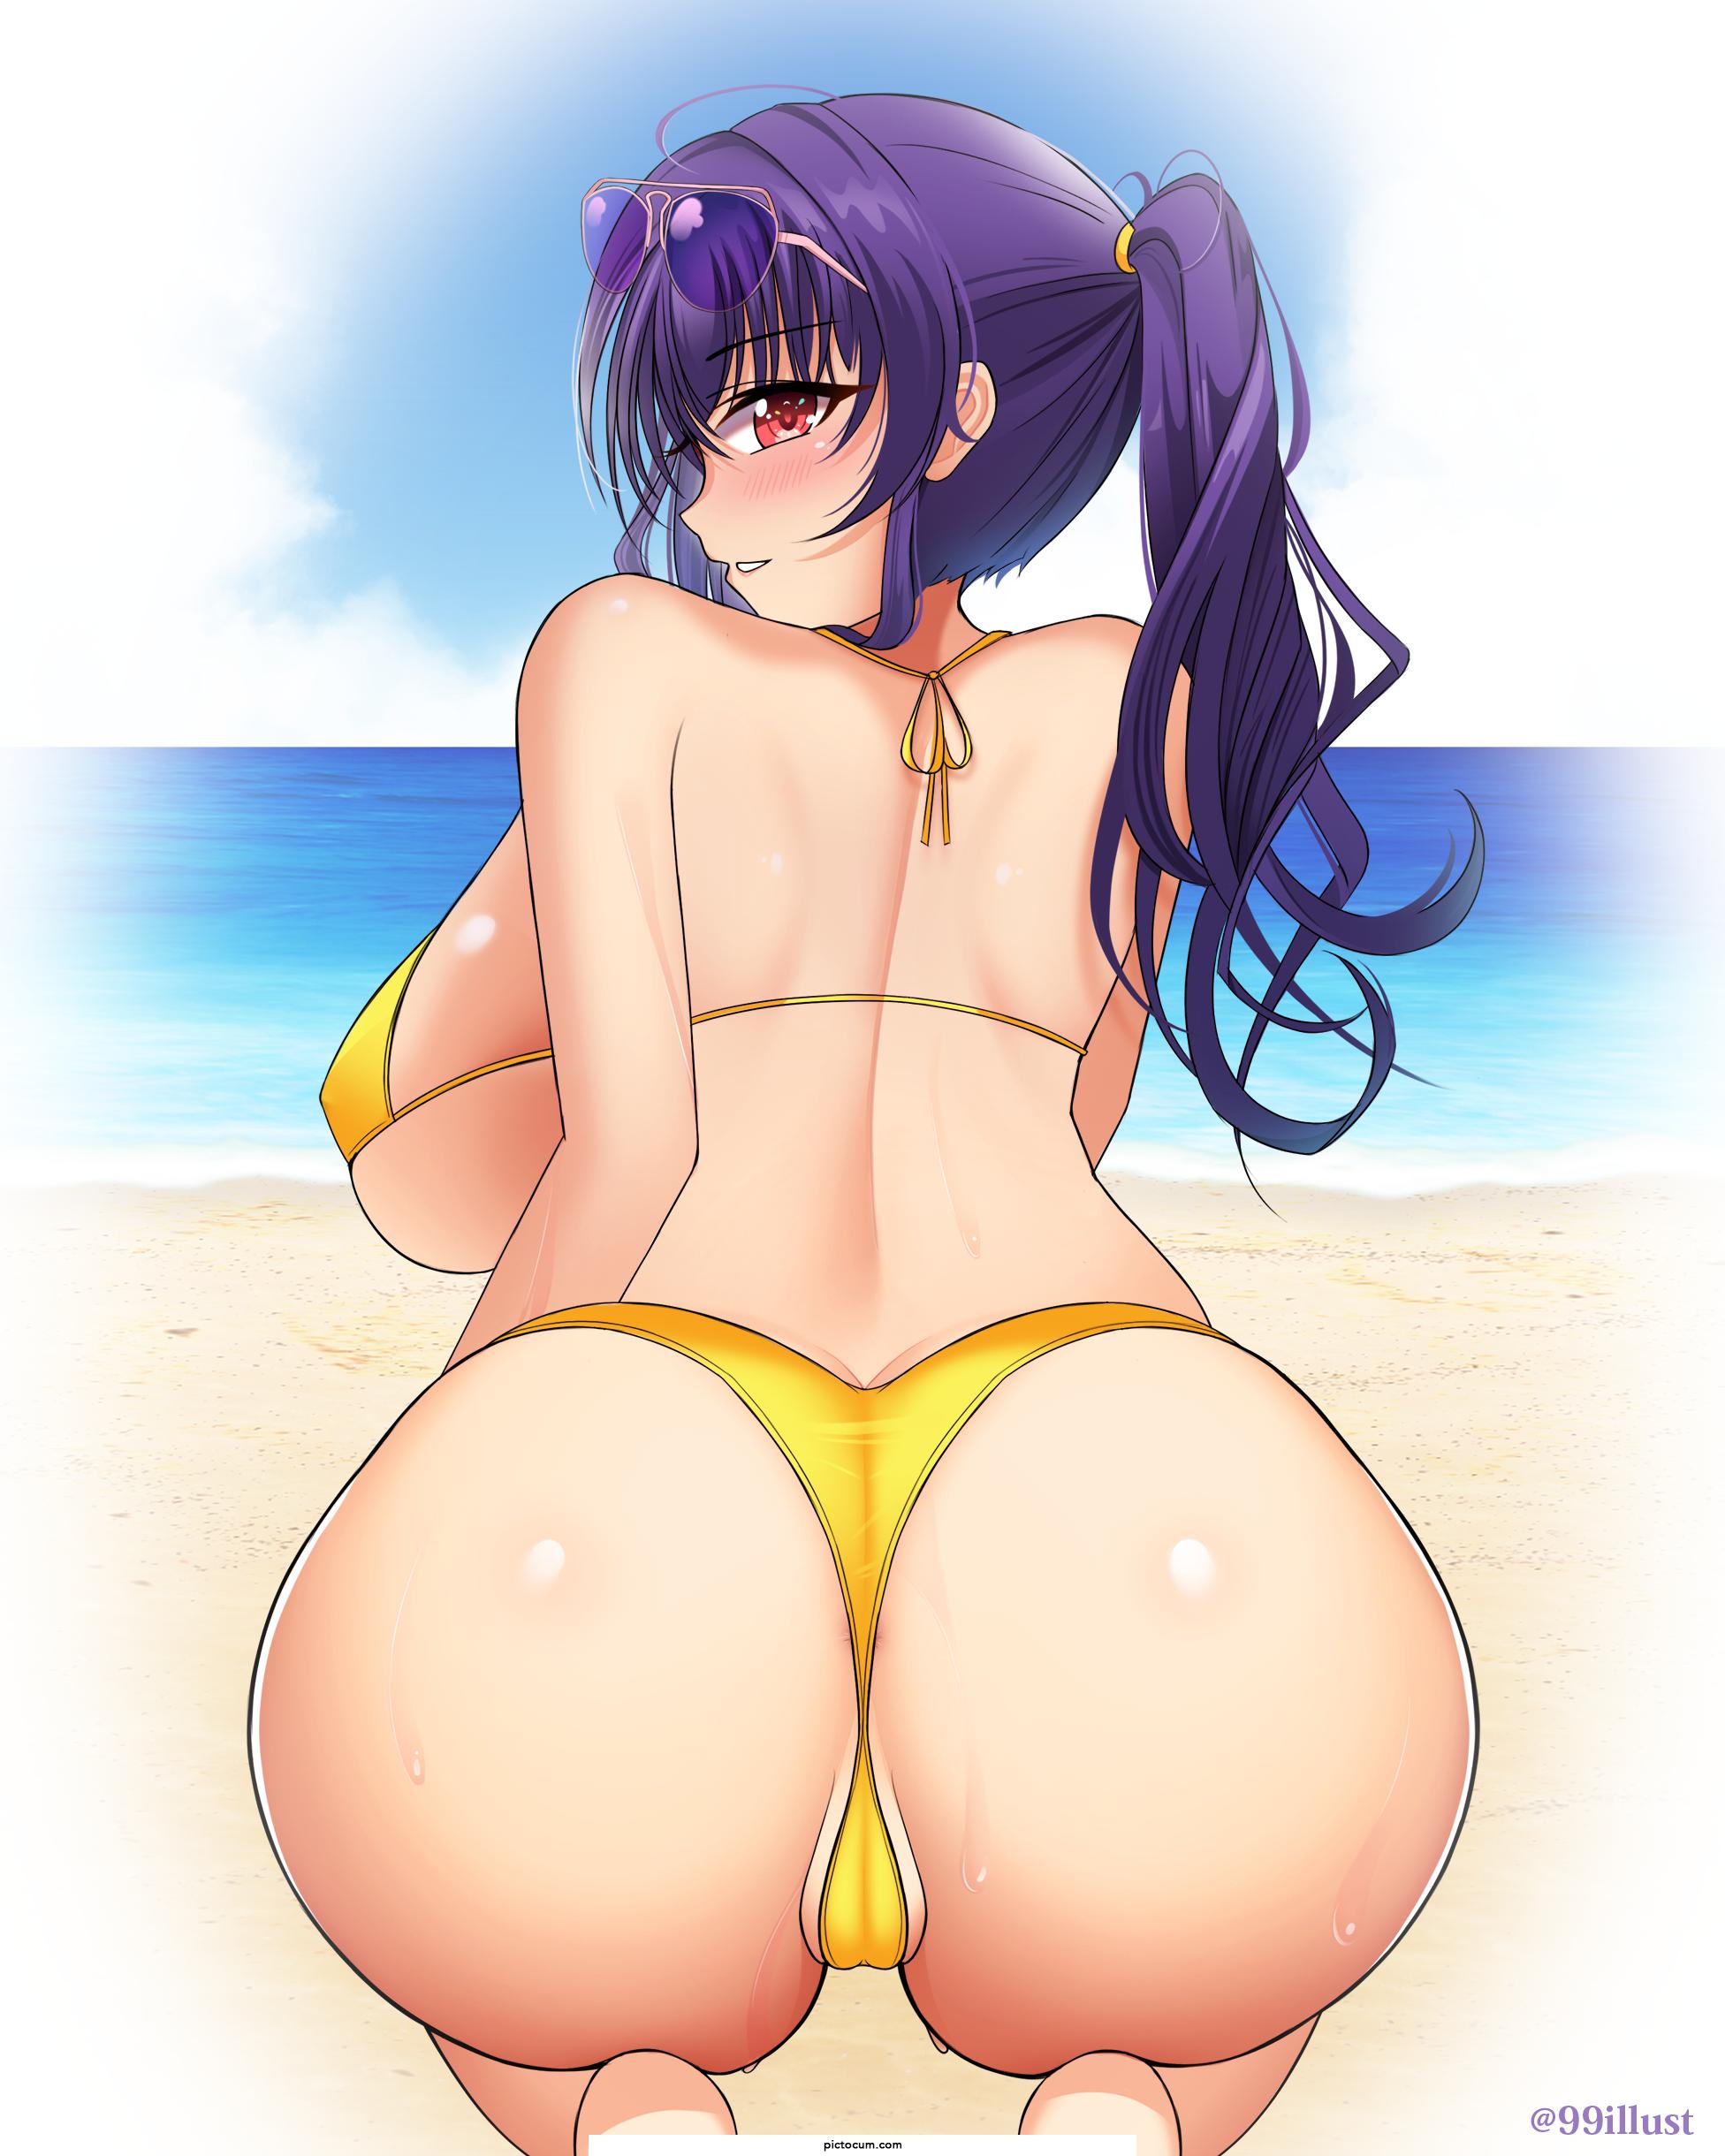  Big bikini booty at the beach